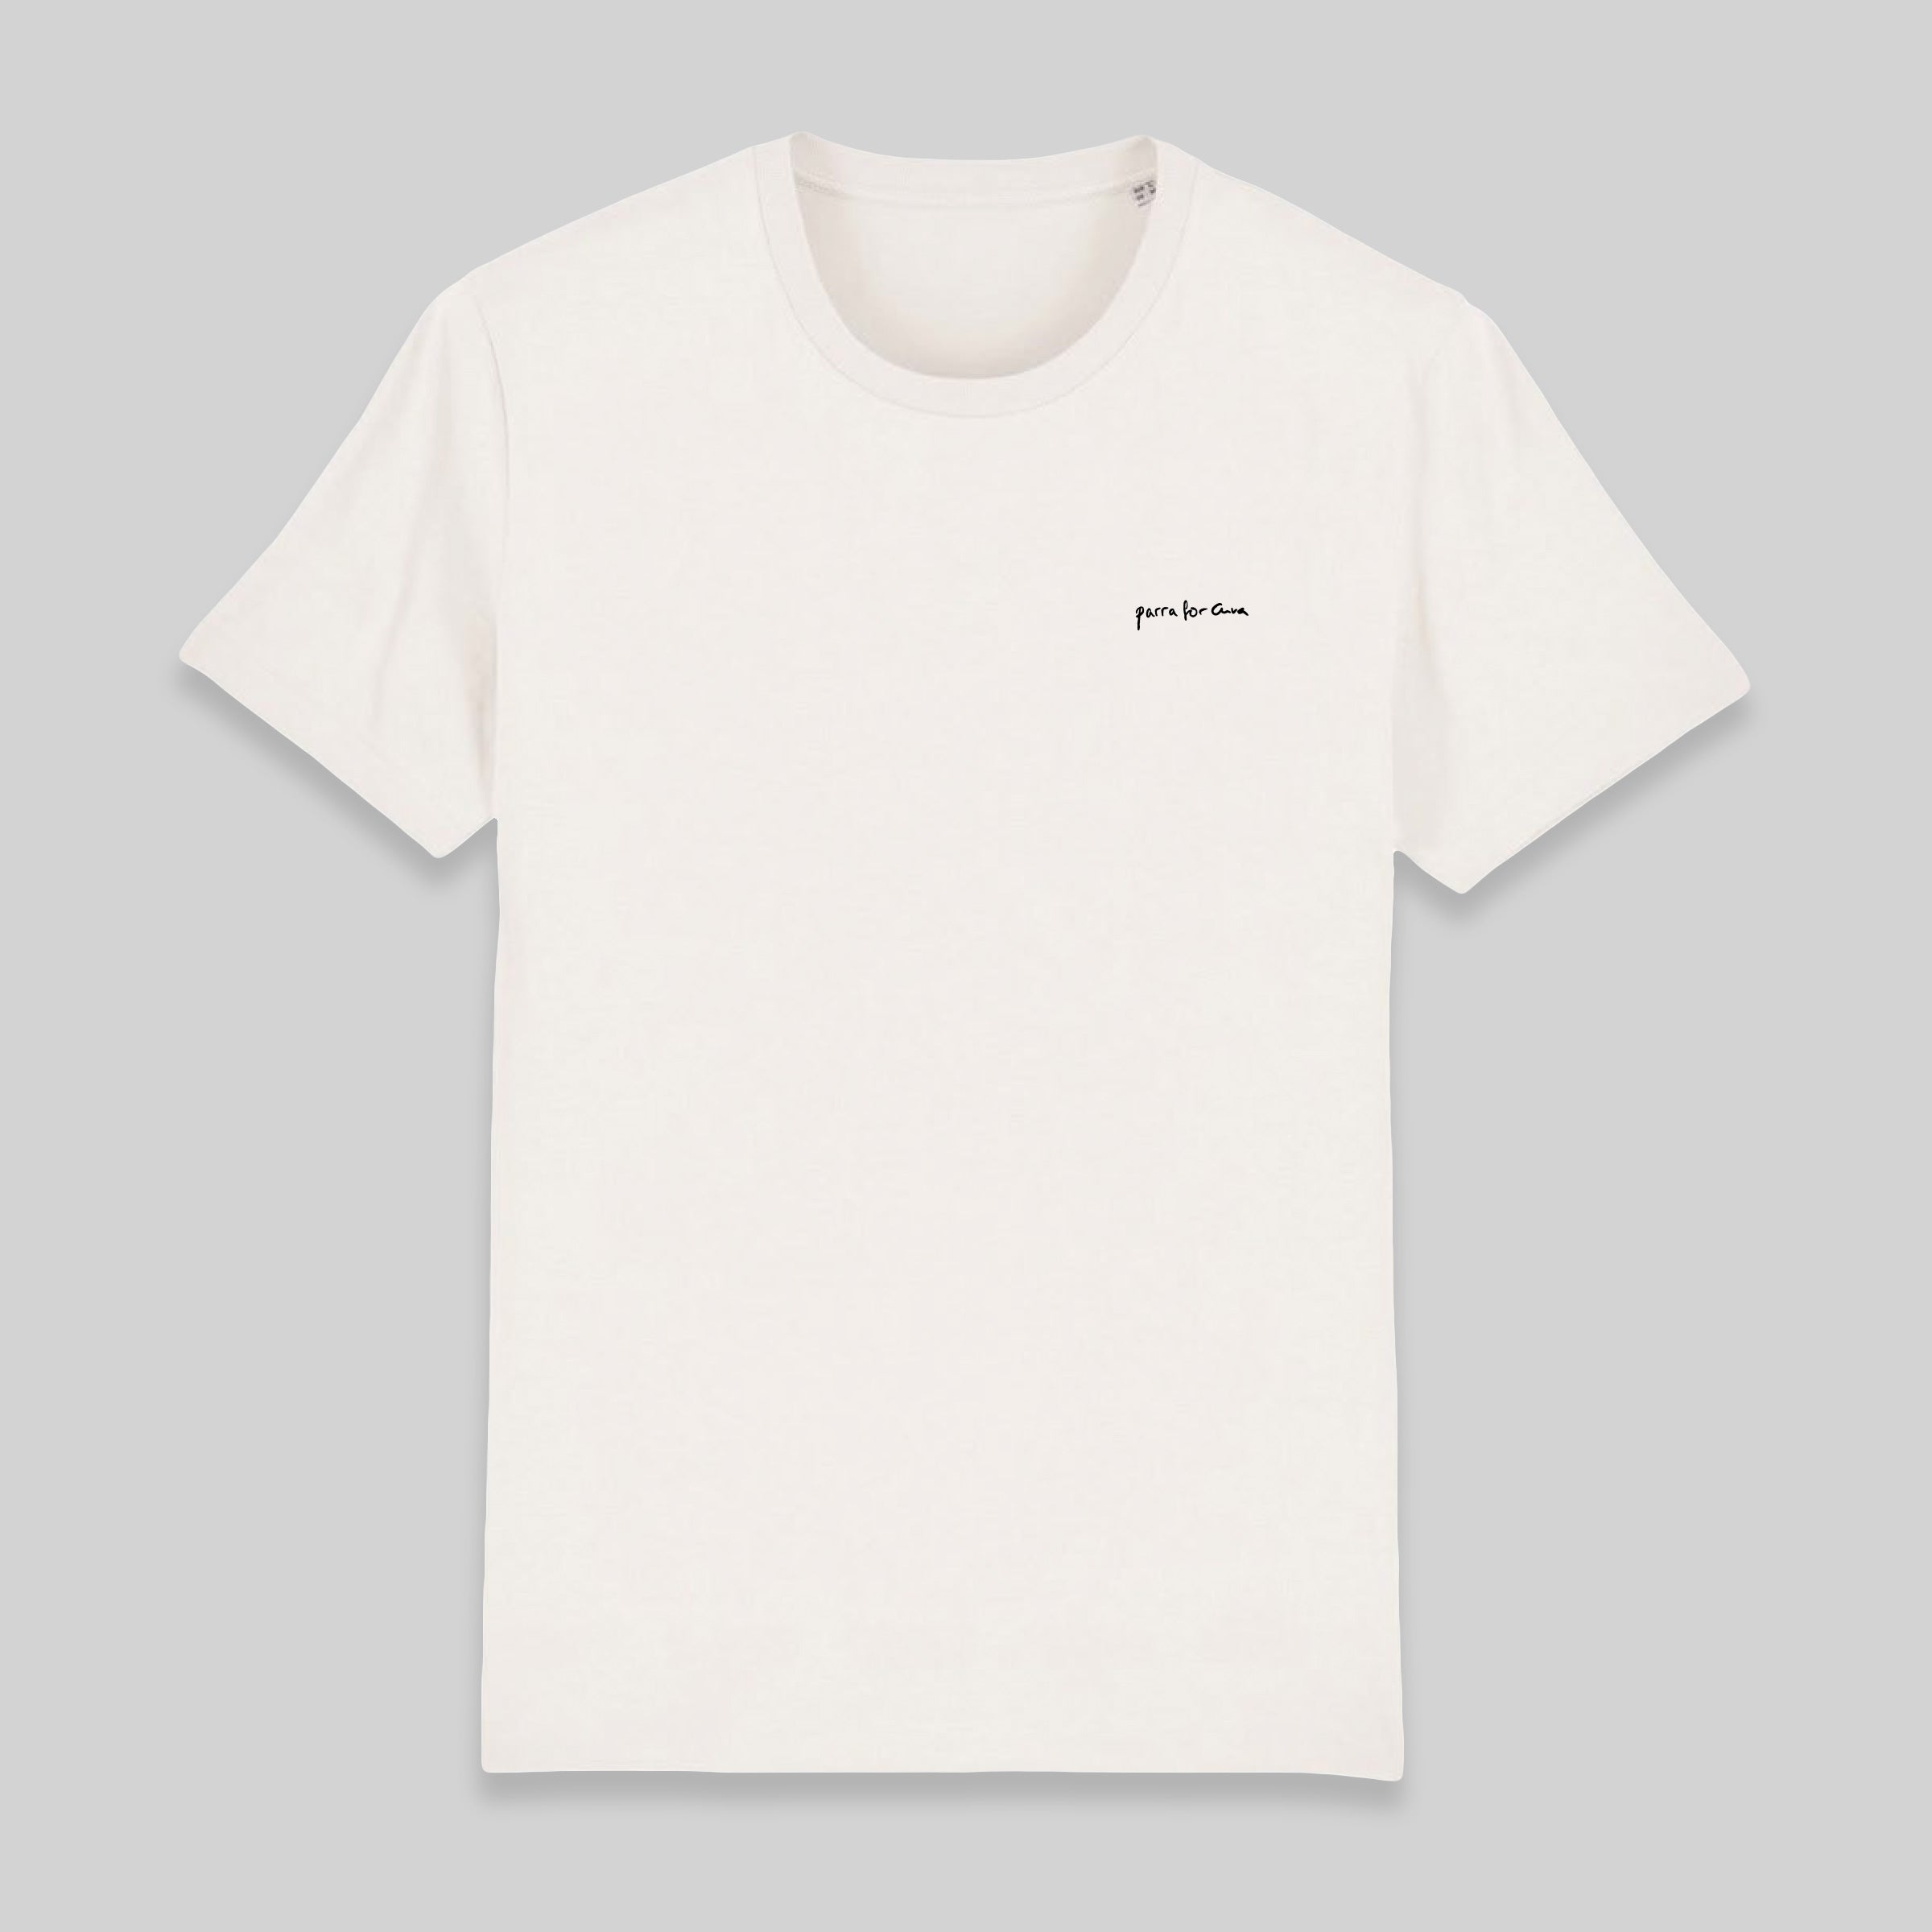 Chutzpah™ Vintage Brand Unisex T-Shirt (White Logo) – Chutzpah